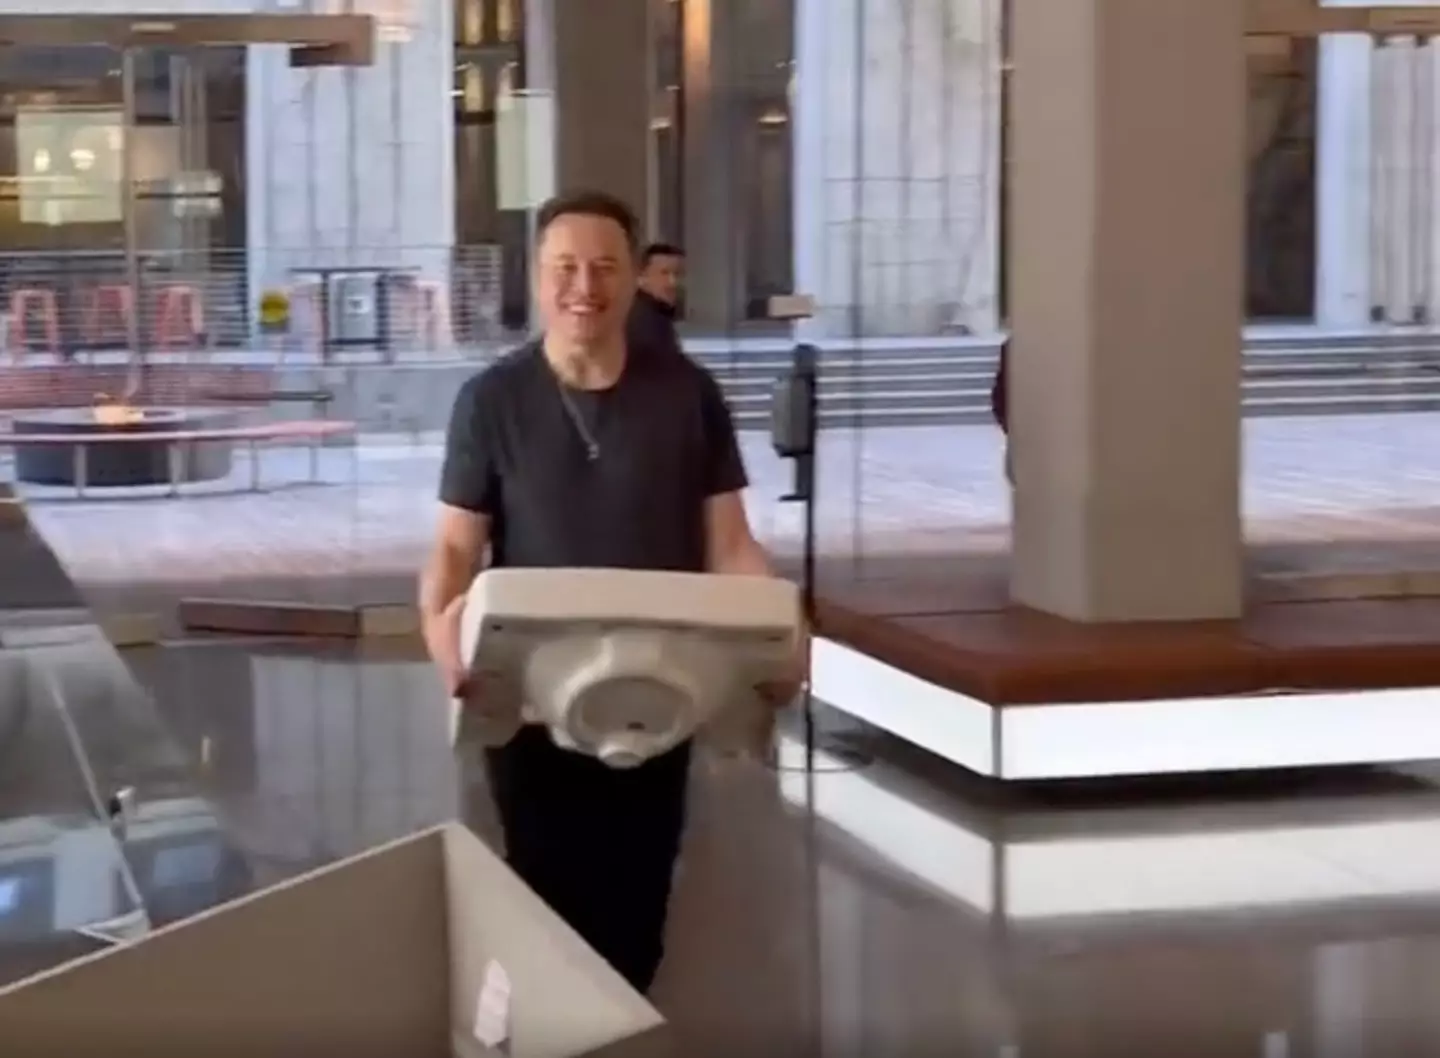 Elon Musk was seen carrying a sink into Twitter HQ.